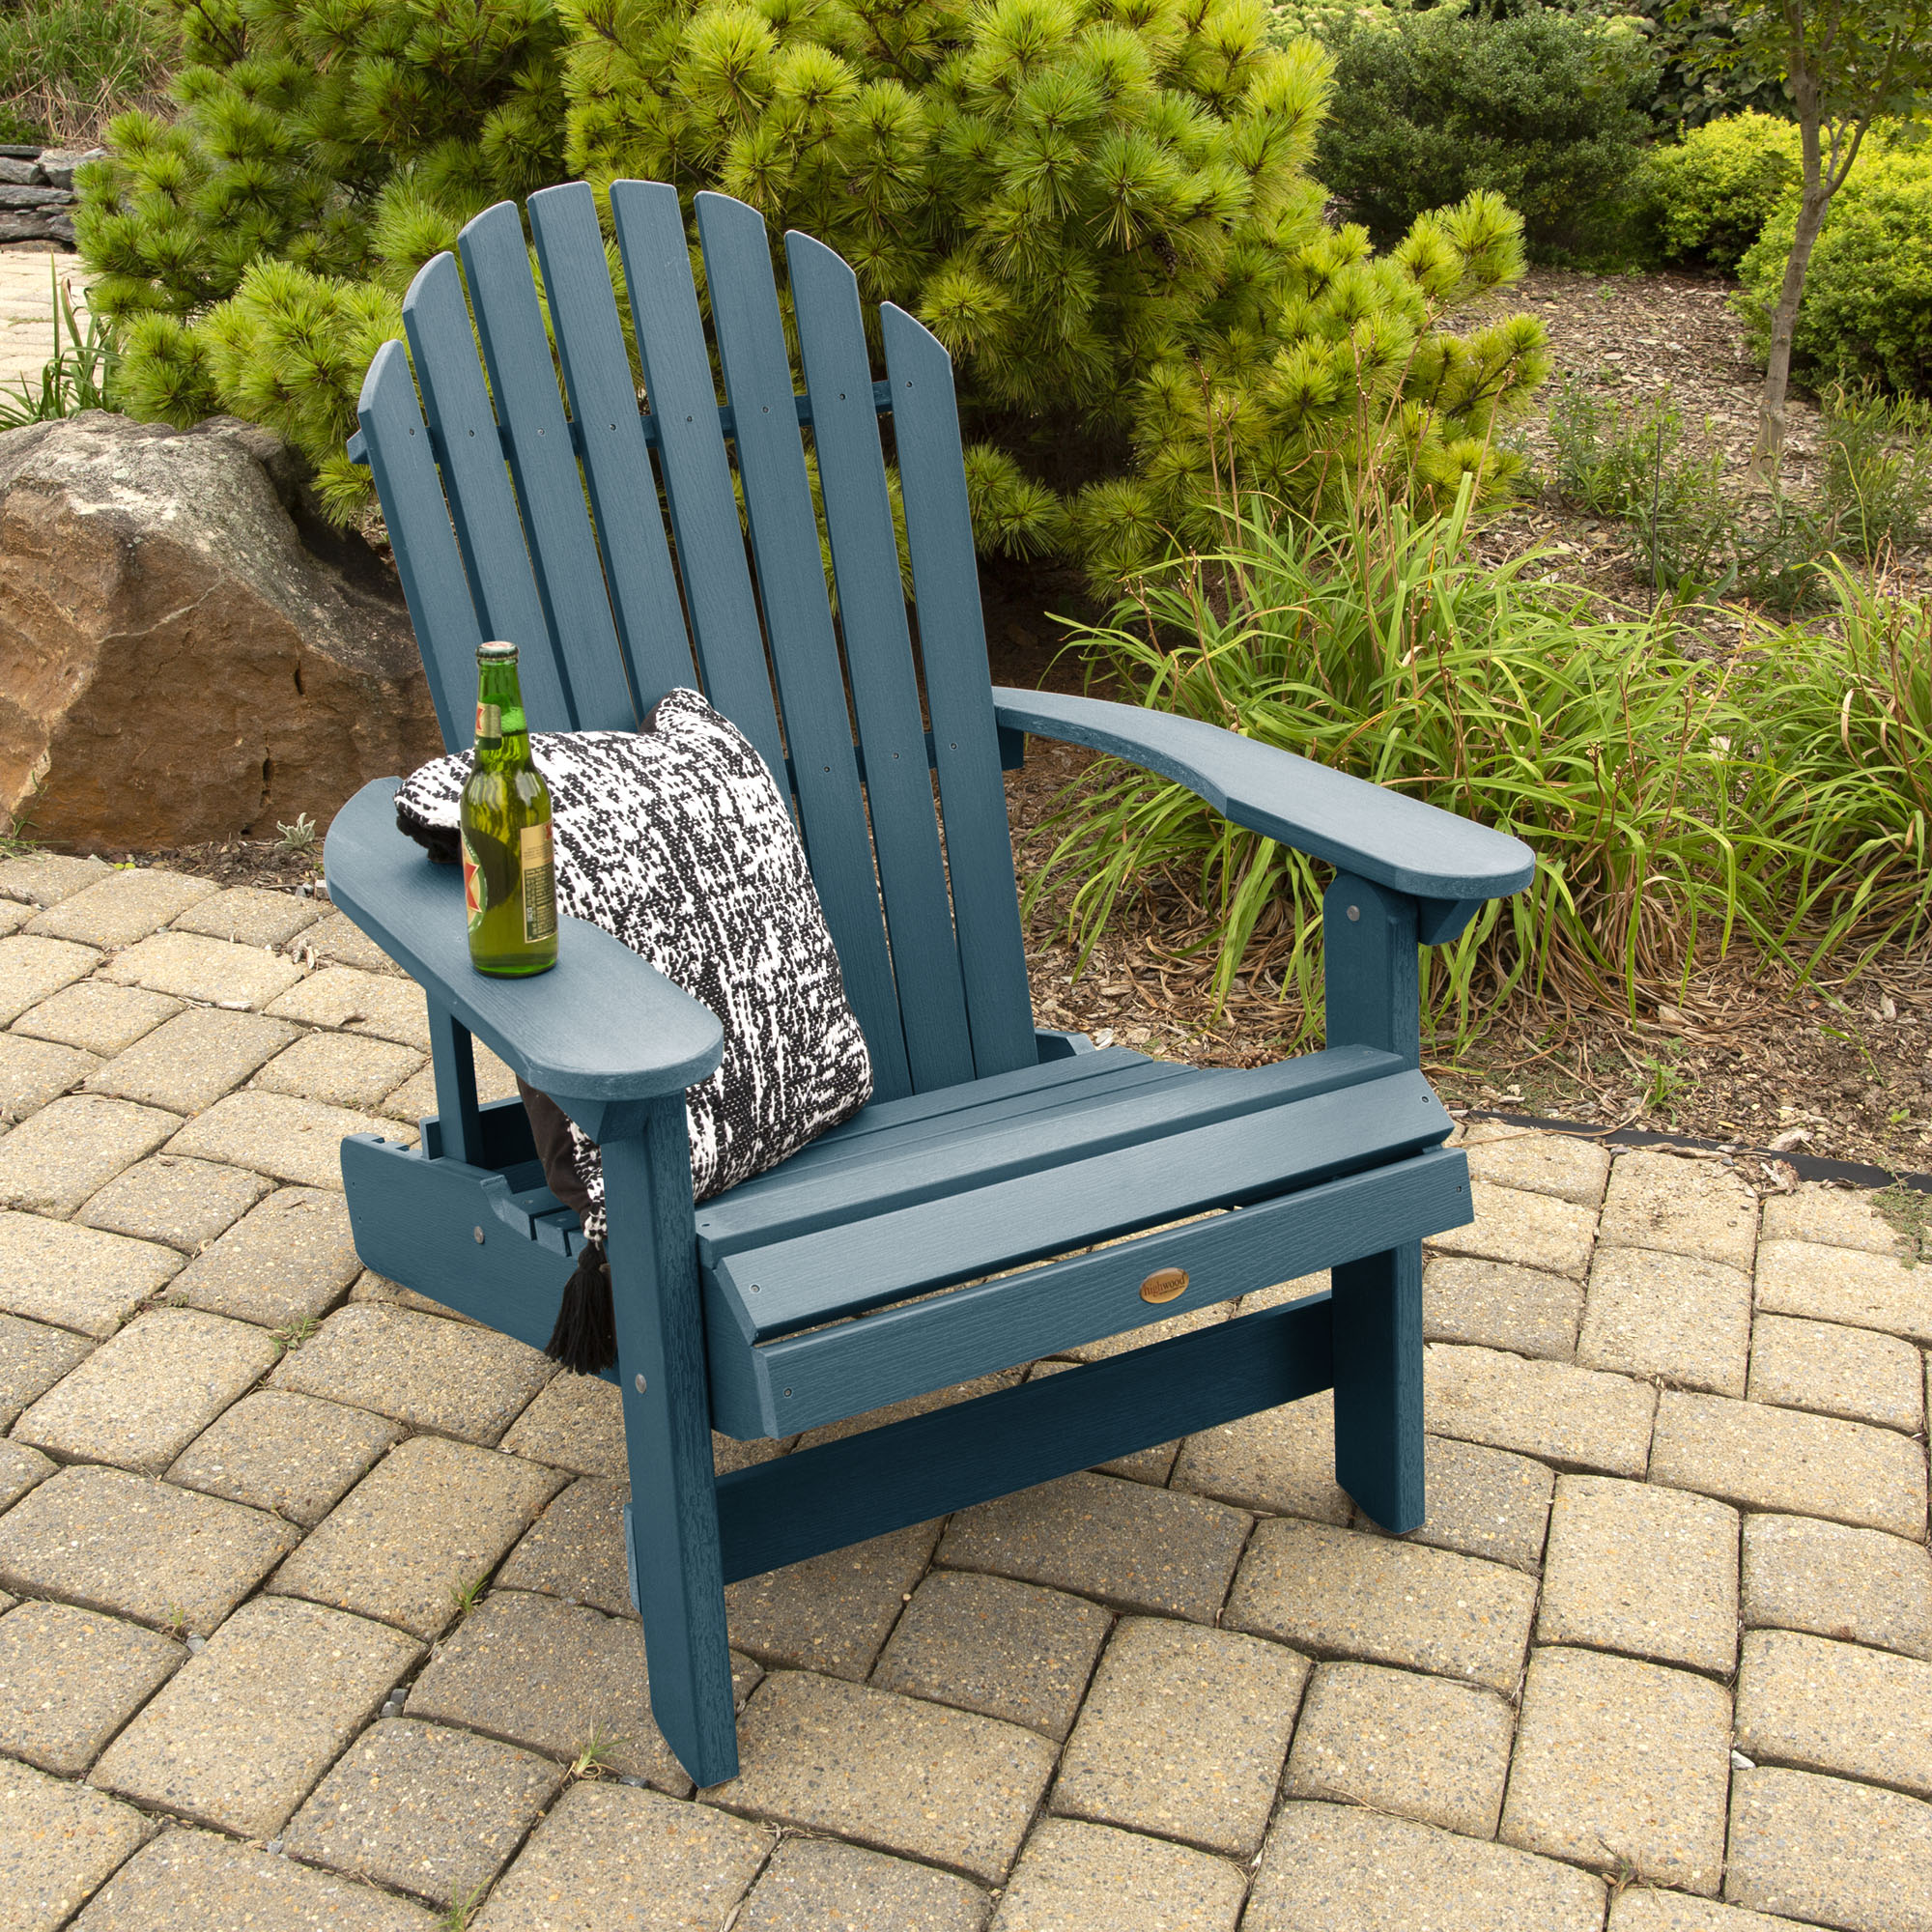 Highwood's Folding & Reclining King Hamilton Adirondack Chair - image 4 of 5